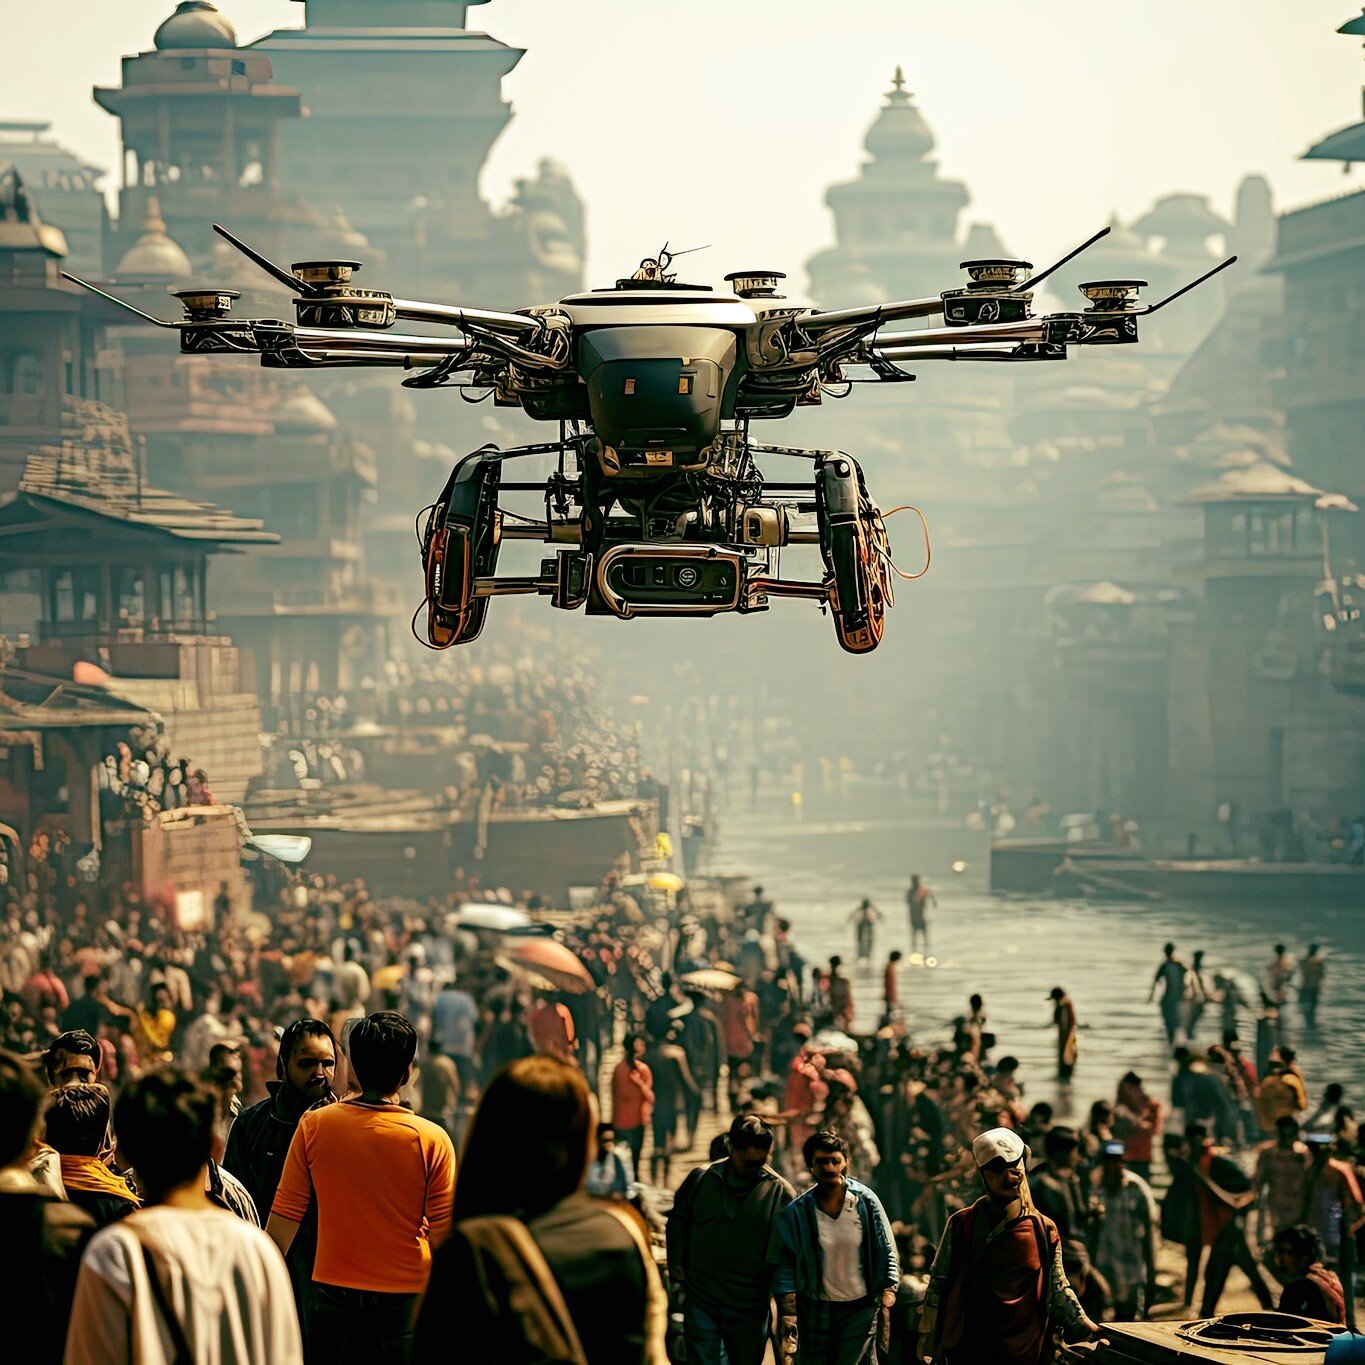 Drones and Robots Surveillance
.
.
.
.
.
#planetbpop #scifiart #sciencefictionart #futuristicart
#spaceart #dystopianart #scifi #technoart
#futurismart #conceptart #aiartworks #dystopia #generativeart
#proceduralart #sciencefictionfans #scifiworld
#s